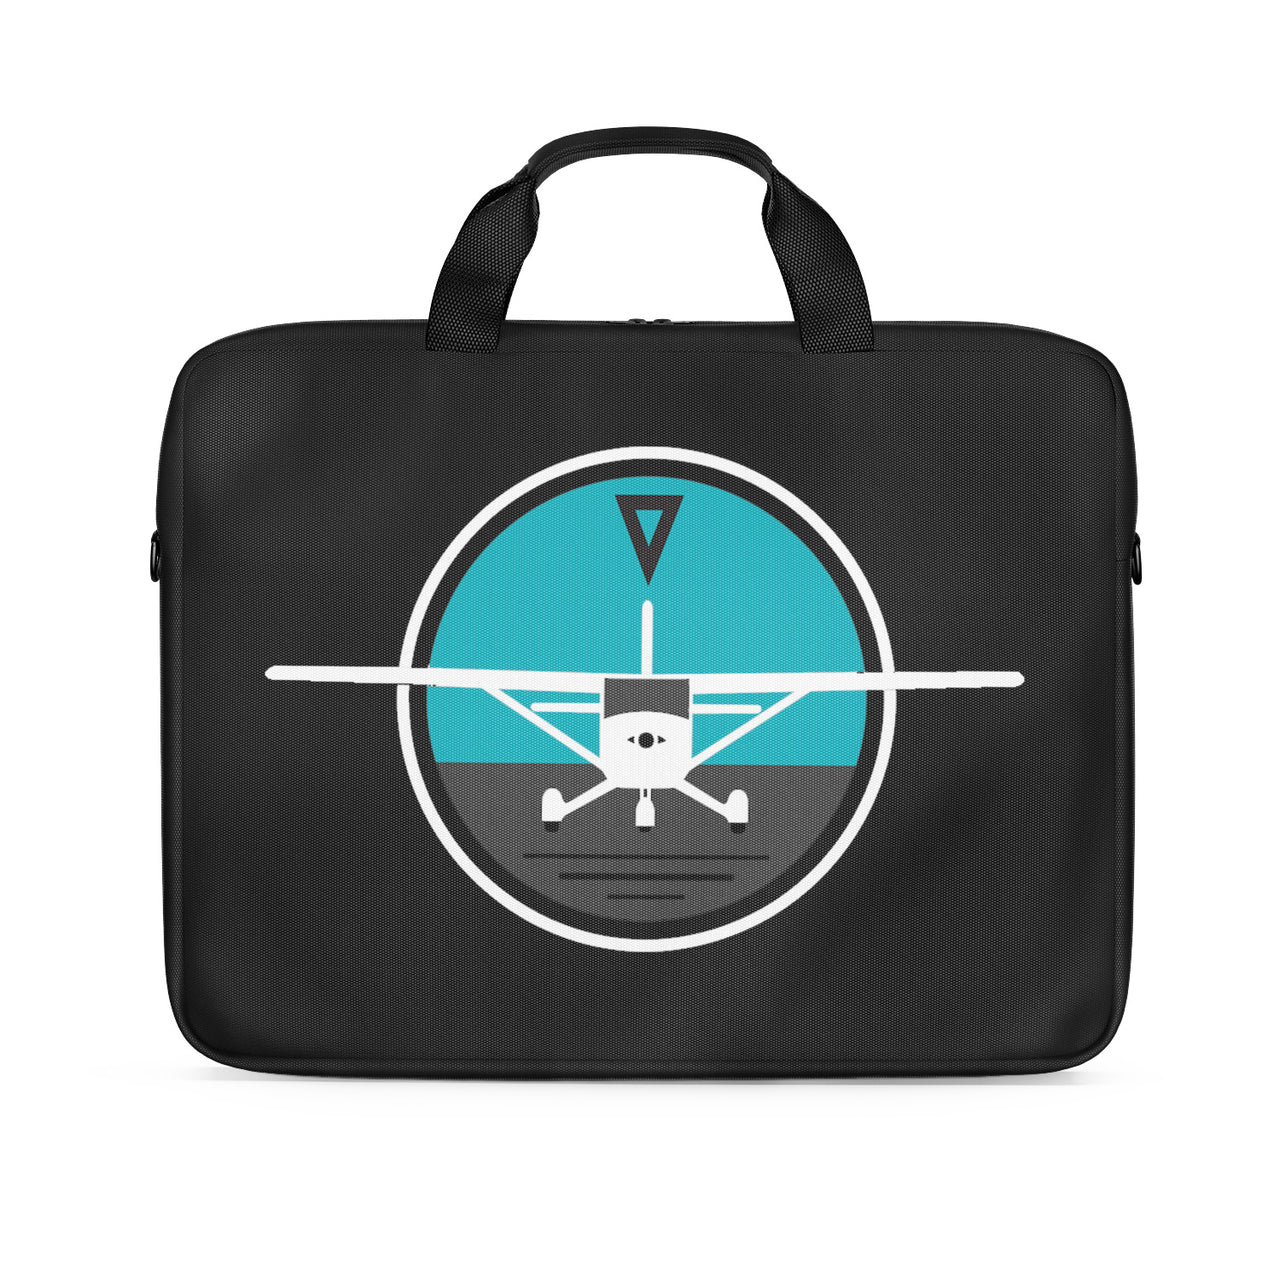 Cessna & Gyro Designed Laptop & Tablet Bags